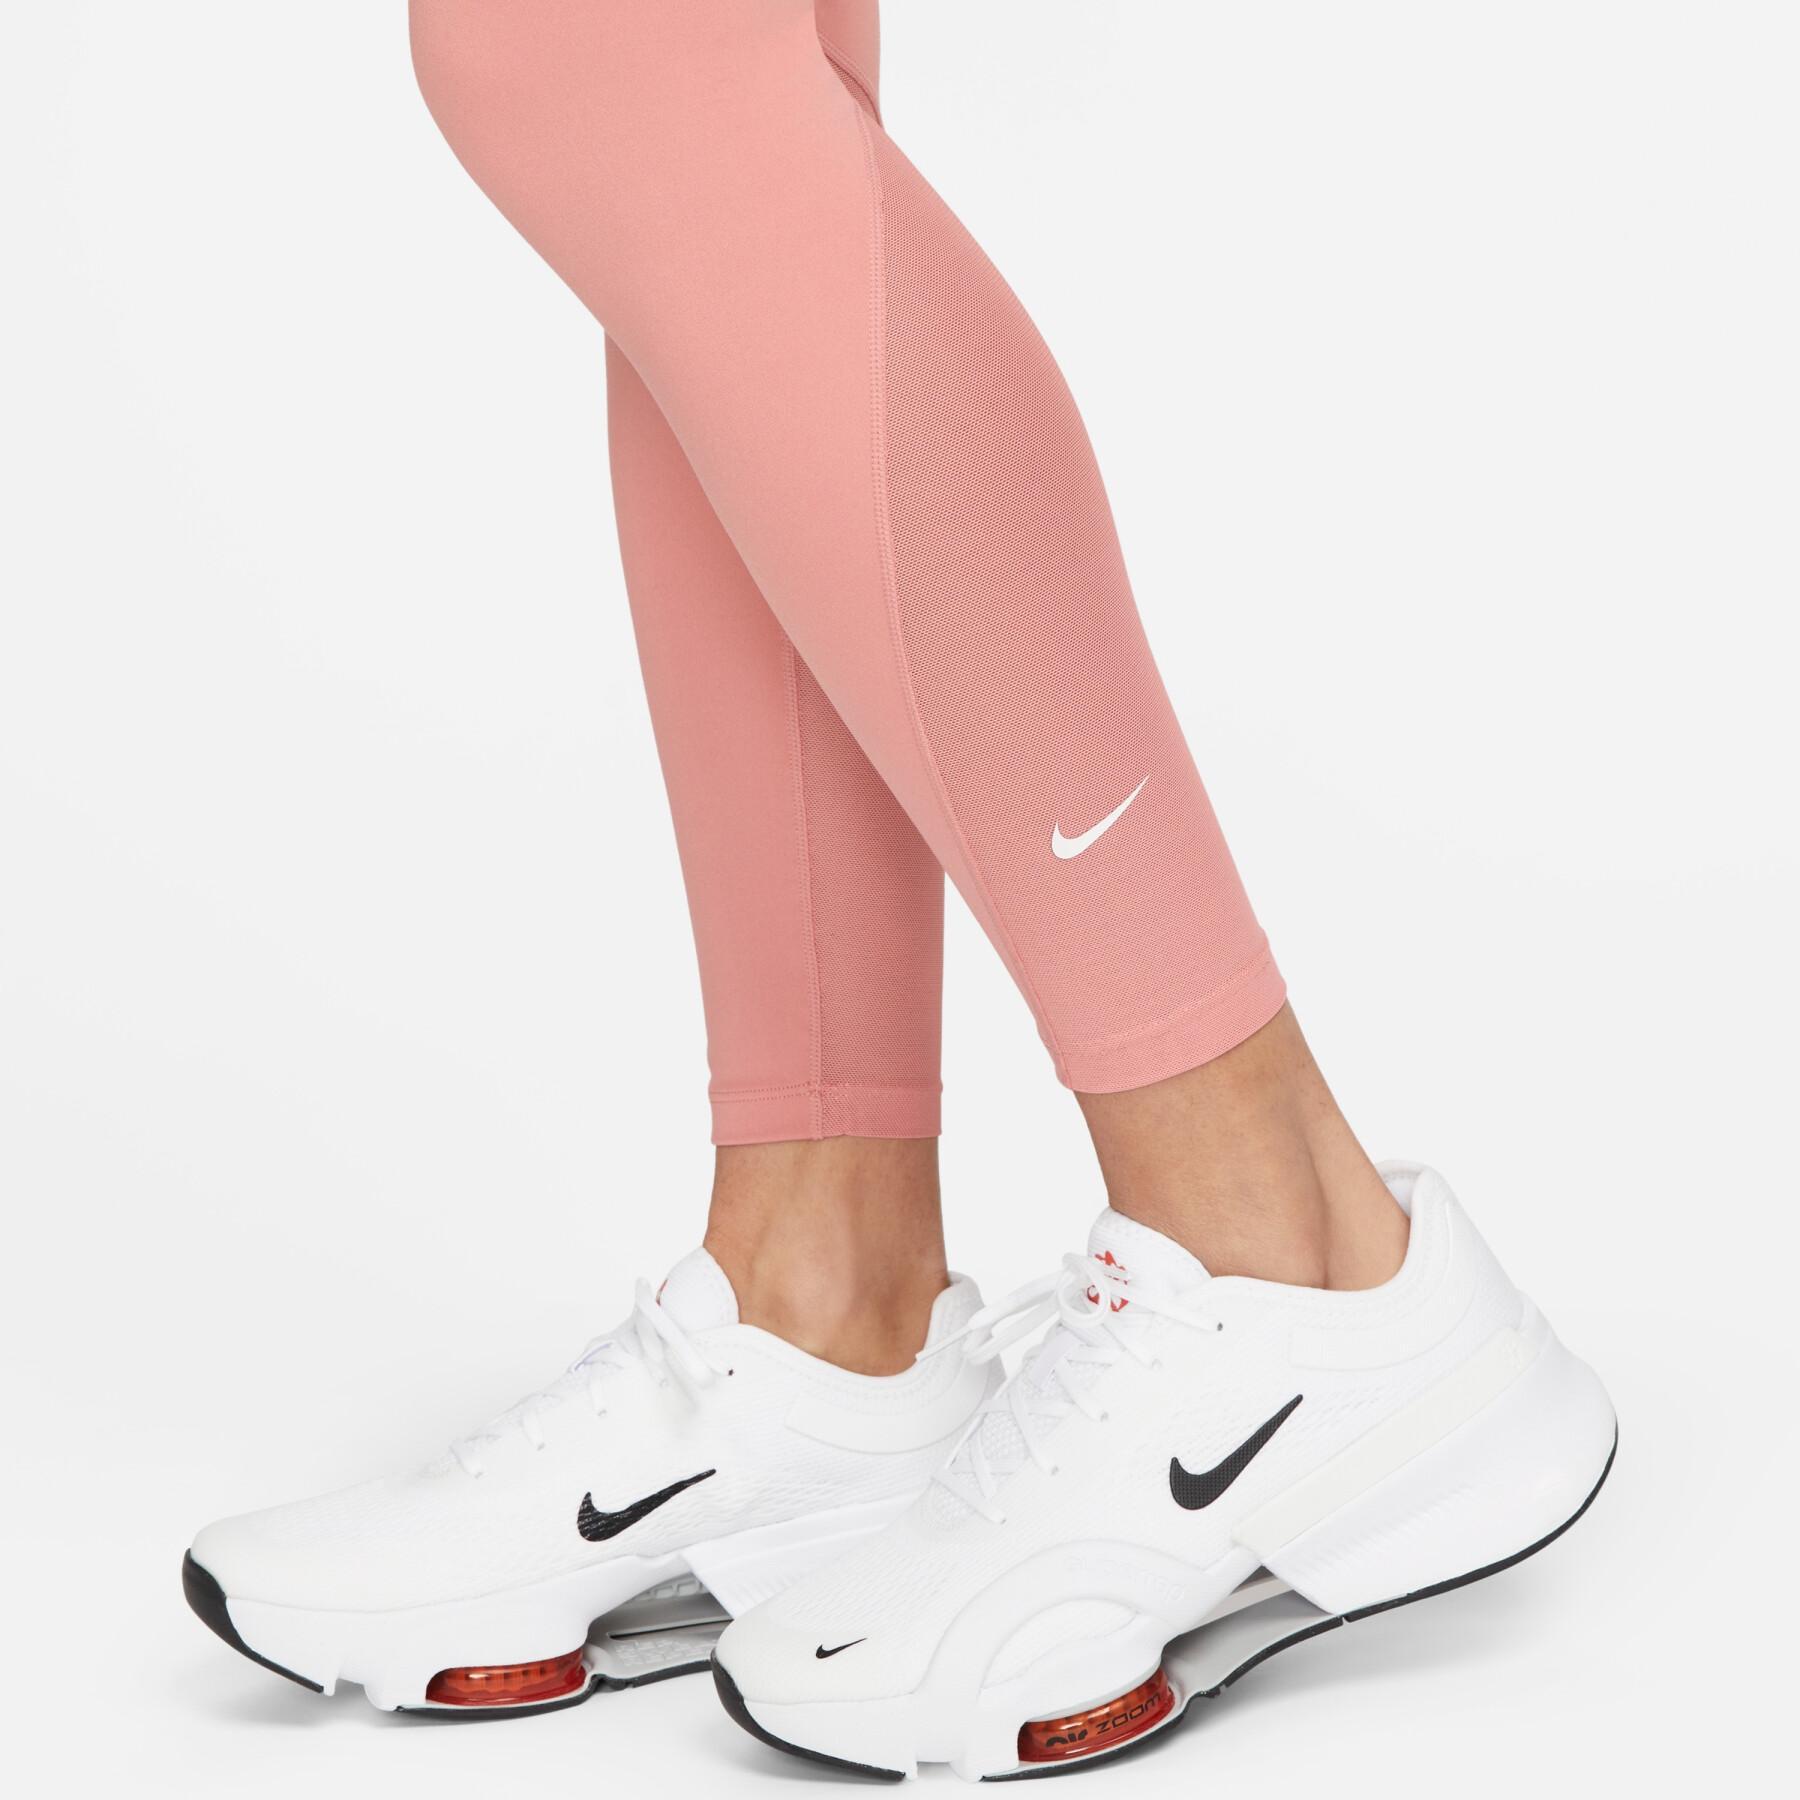 Halbhohe Leggings 7/8 Frau Nike One